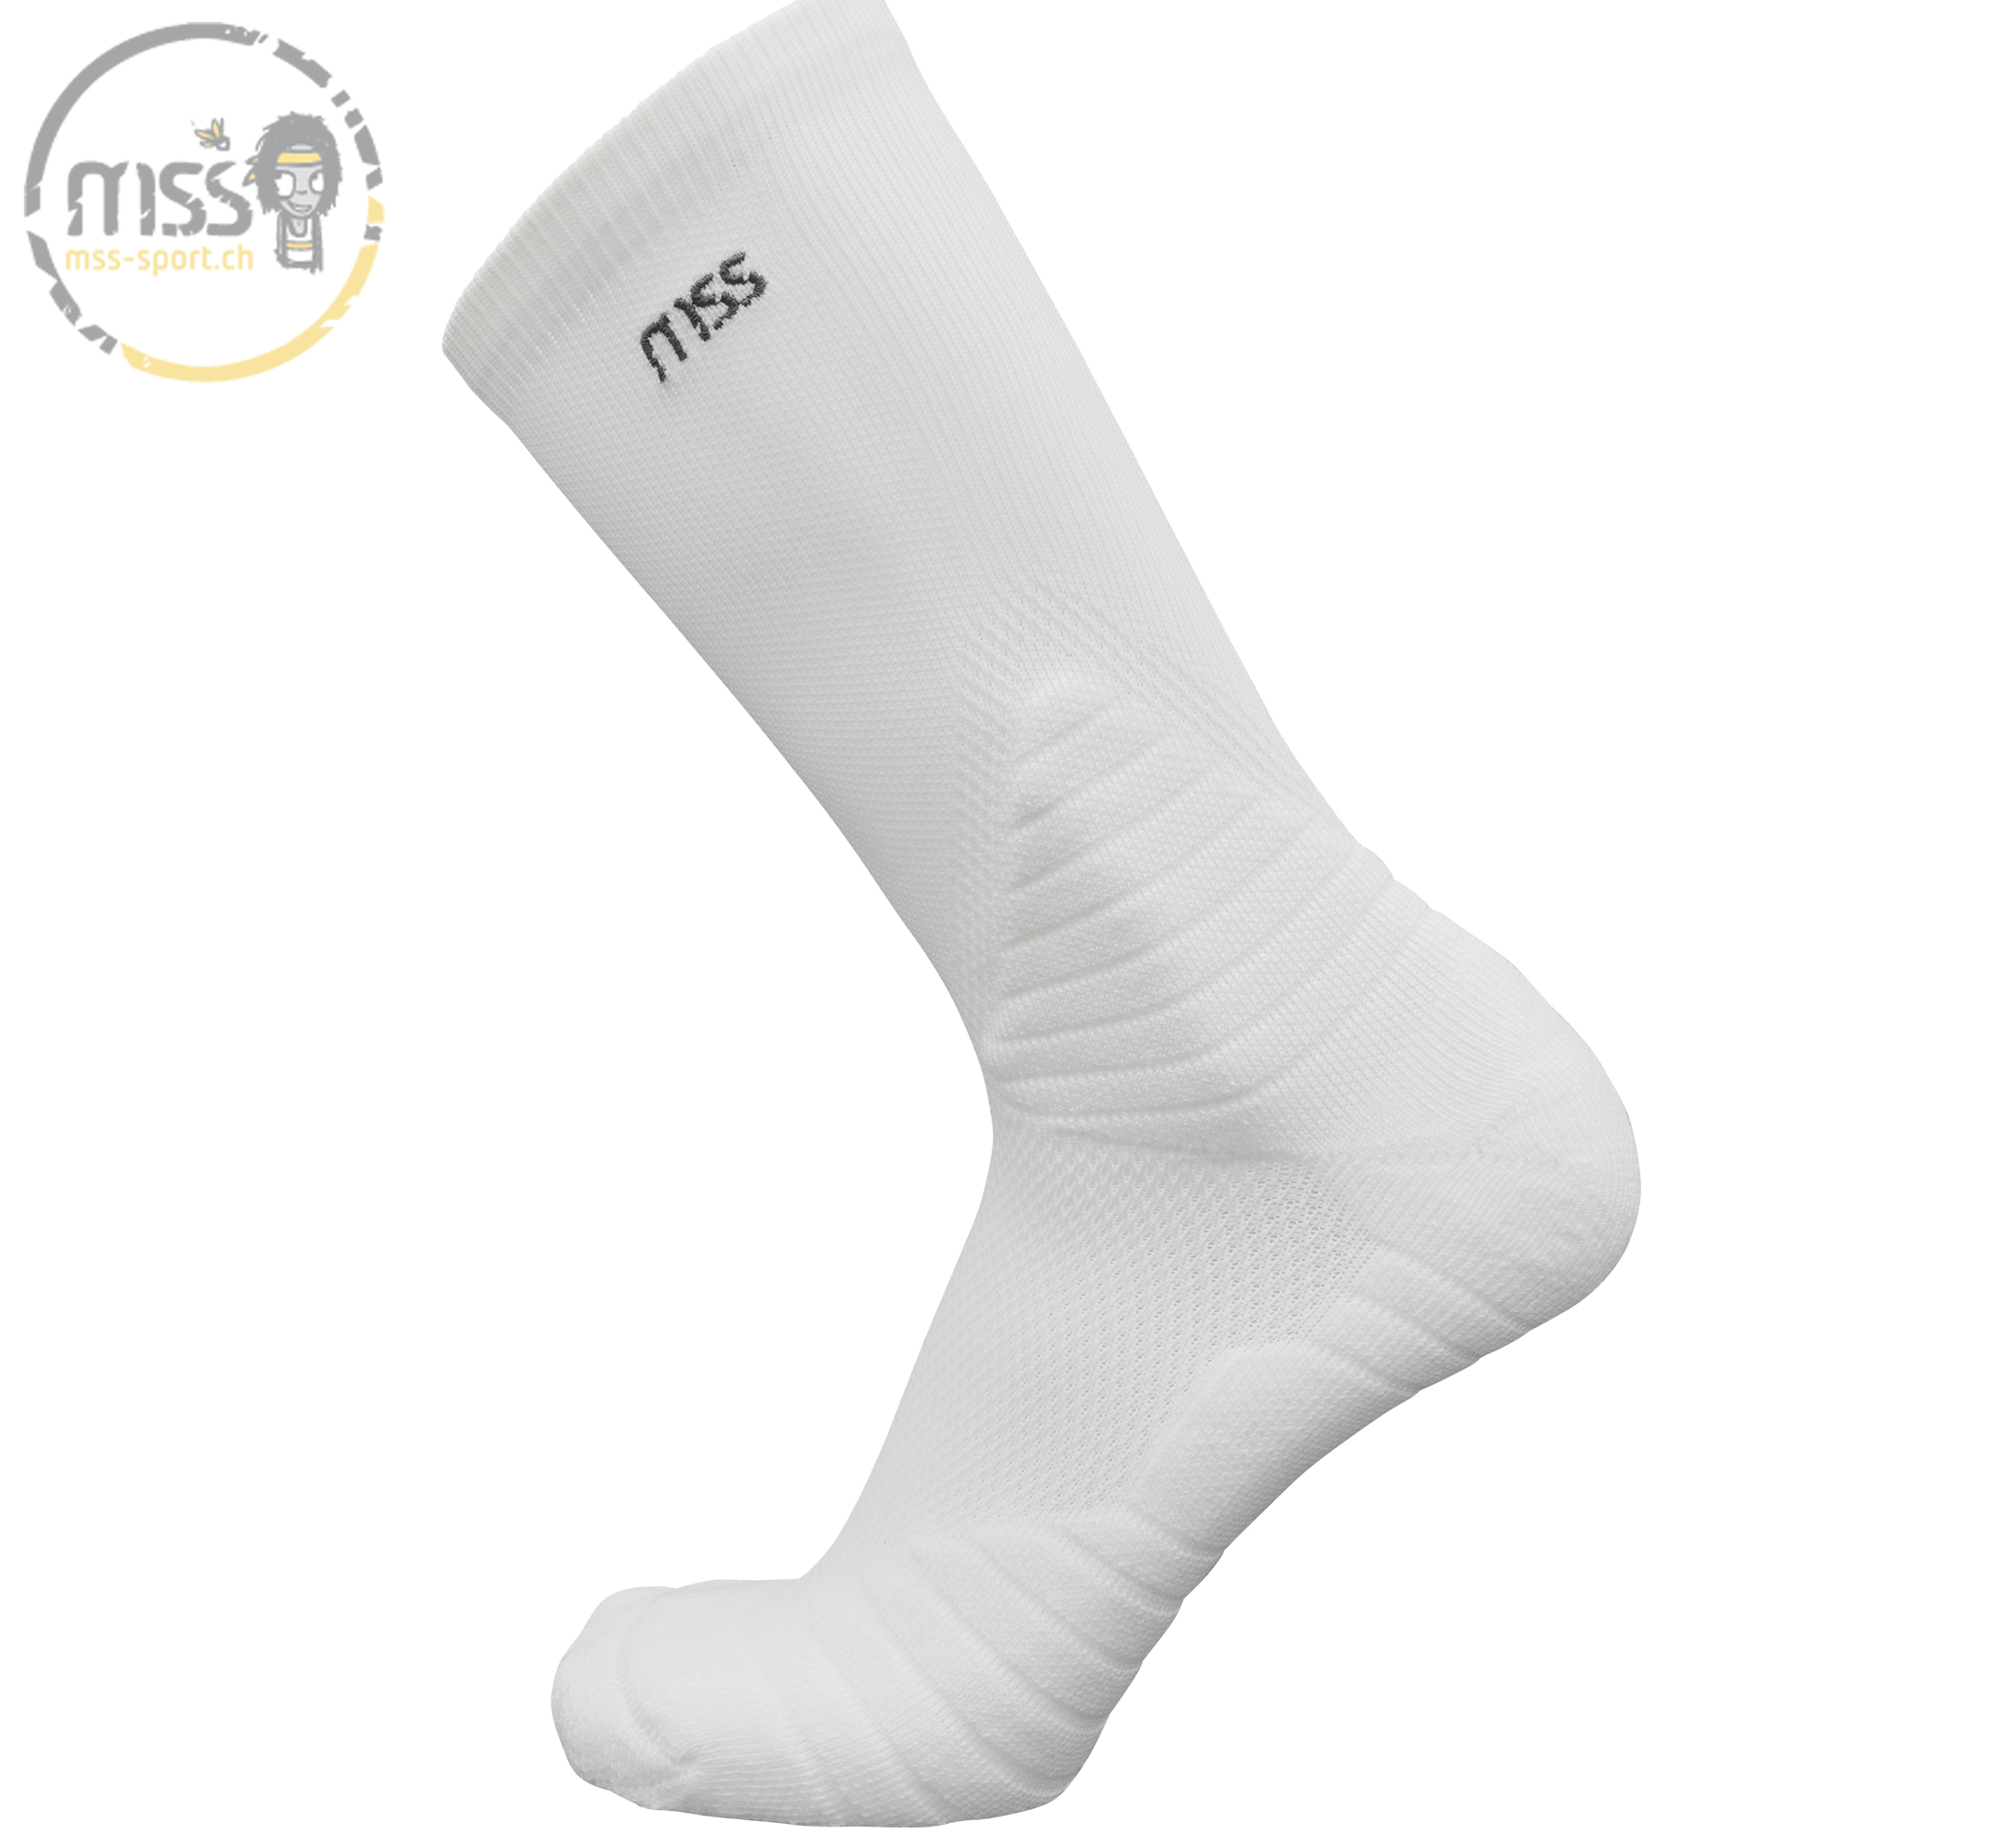 mss-socks Smash 5700 high white